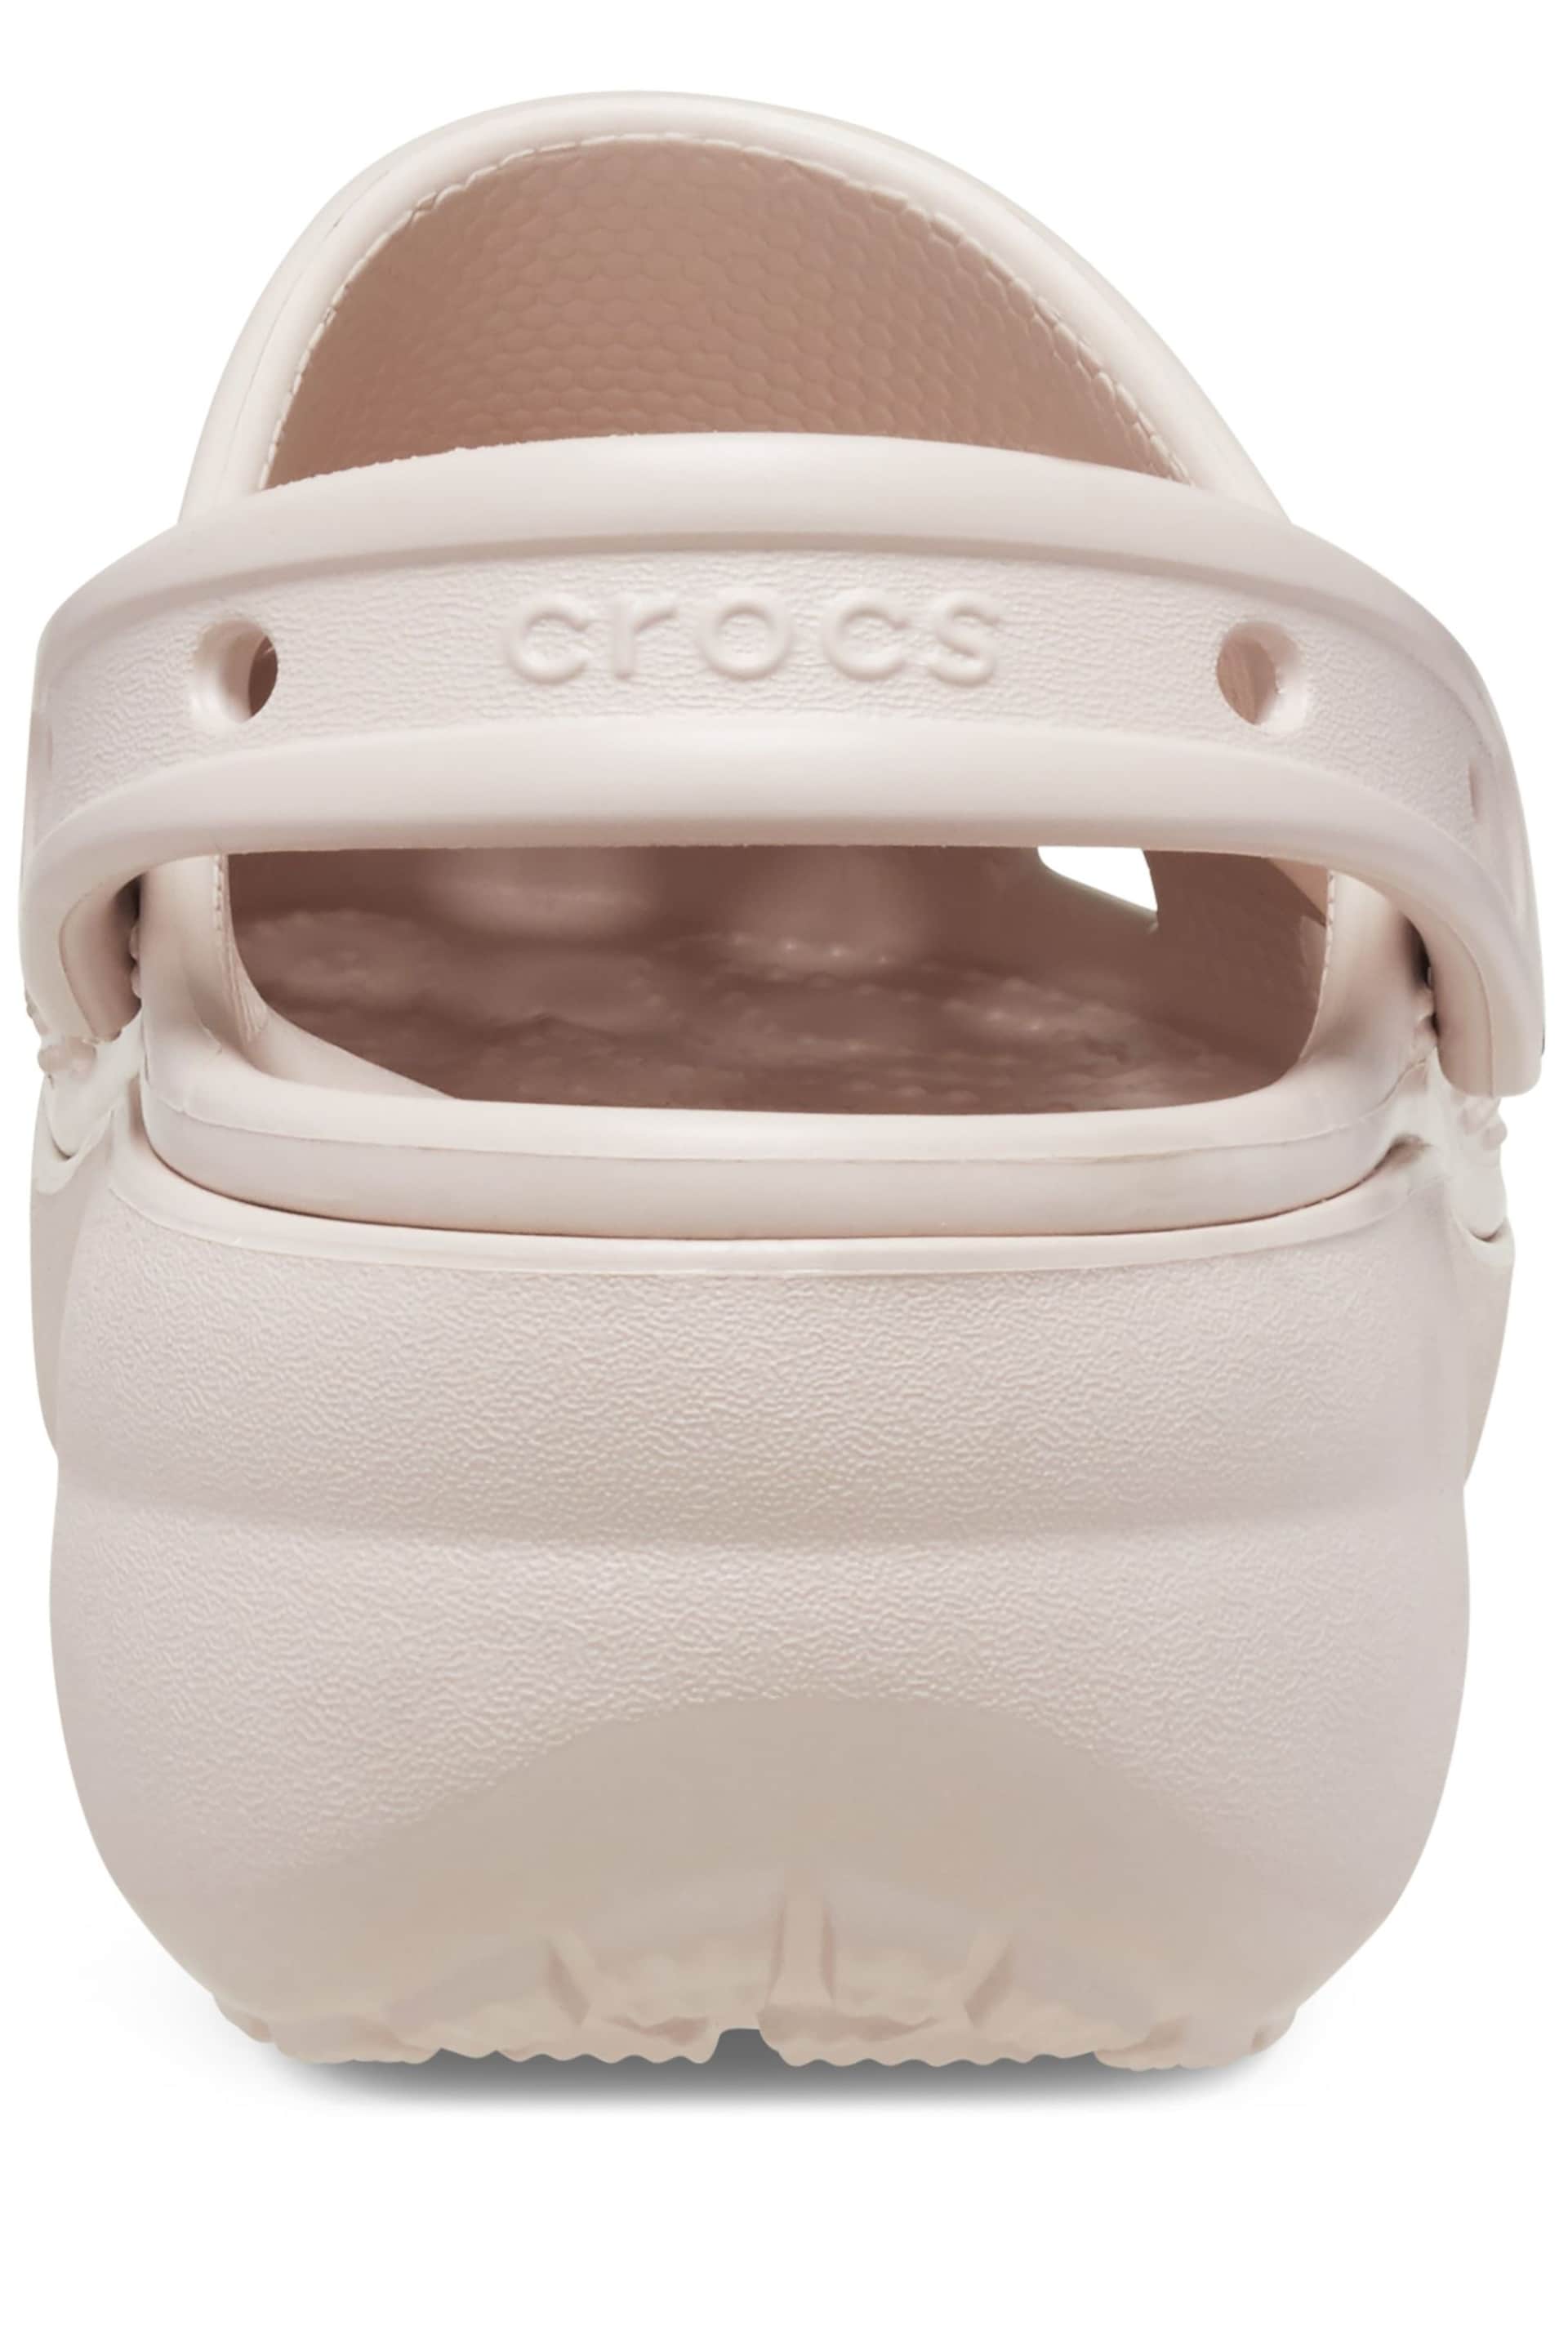 Crocs Classic Platform Clogs - Image 6 of 7